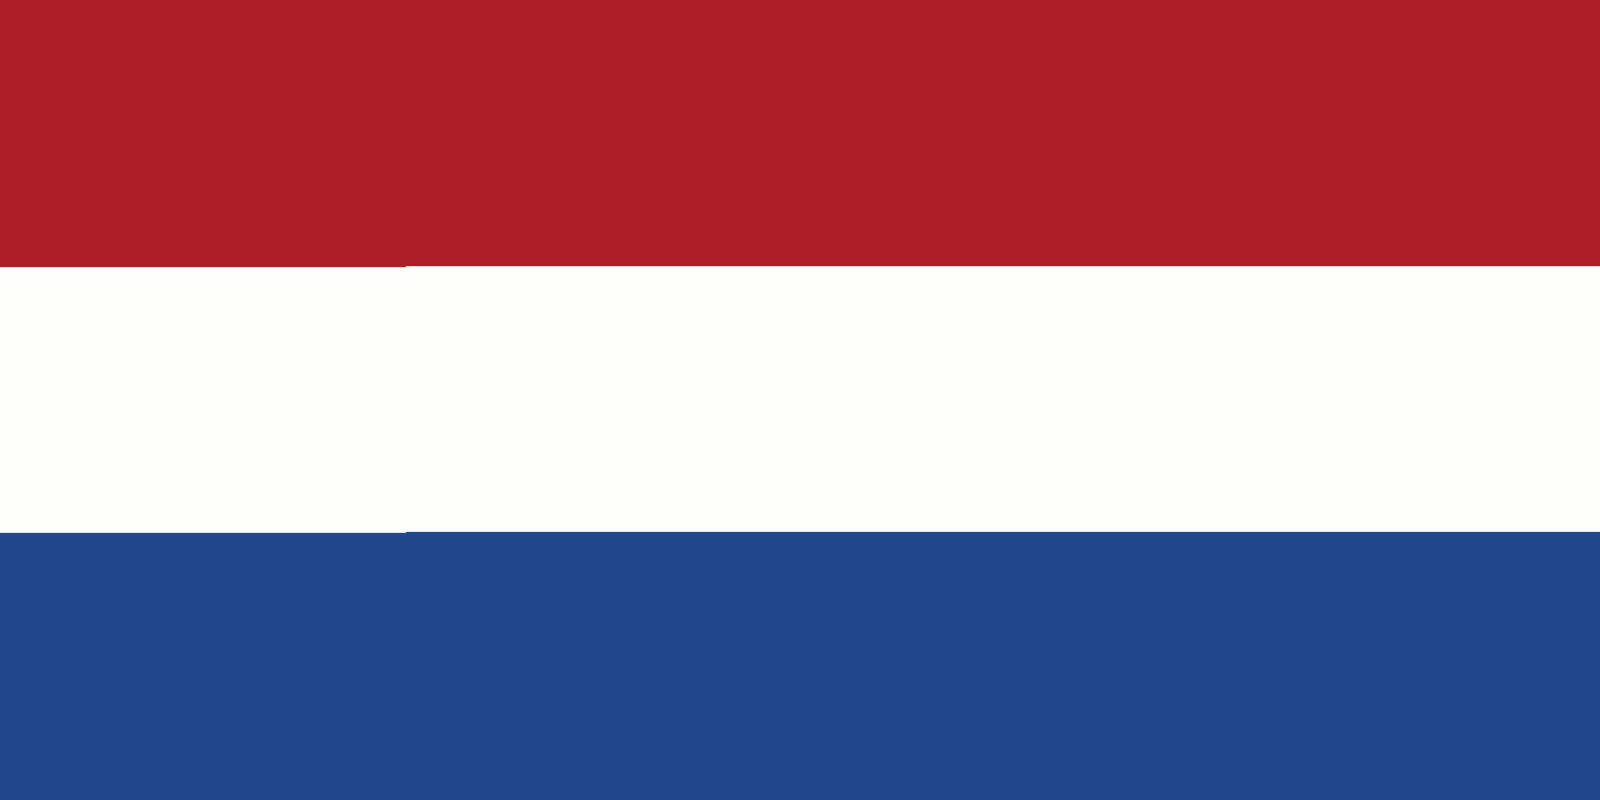 Country flag for {'bidi': False, 'code': 'nl', 'name': 'Dutch', 'name_local': 'Nederlands', 'name_translated': 'Dutch'}